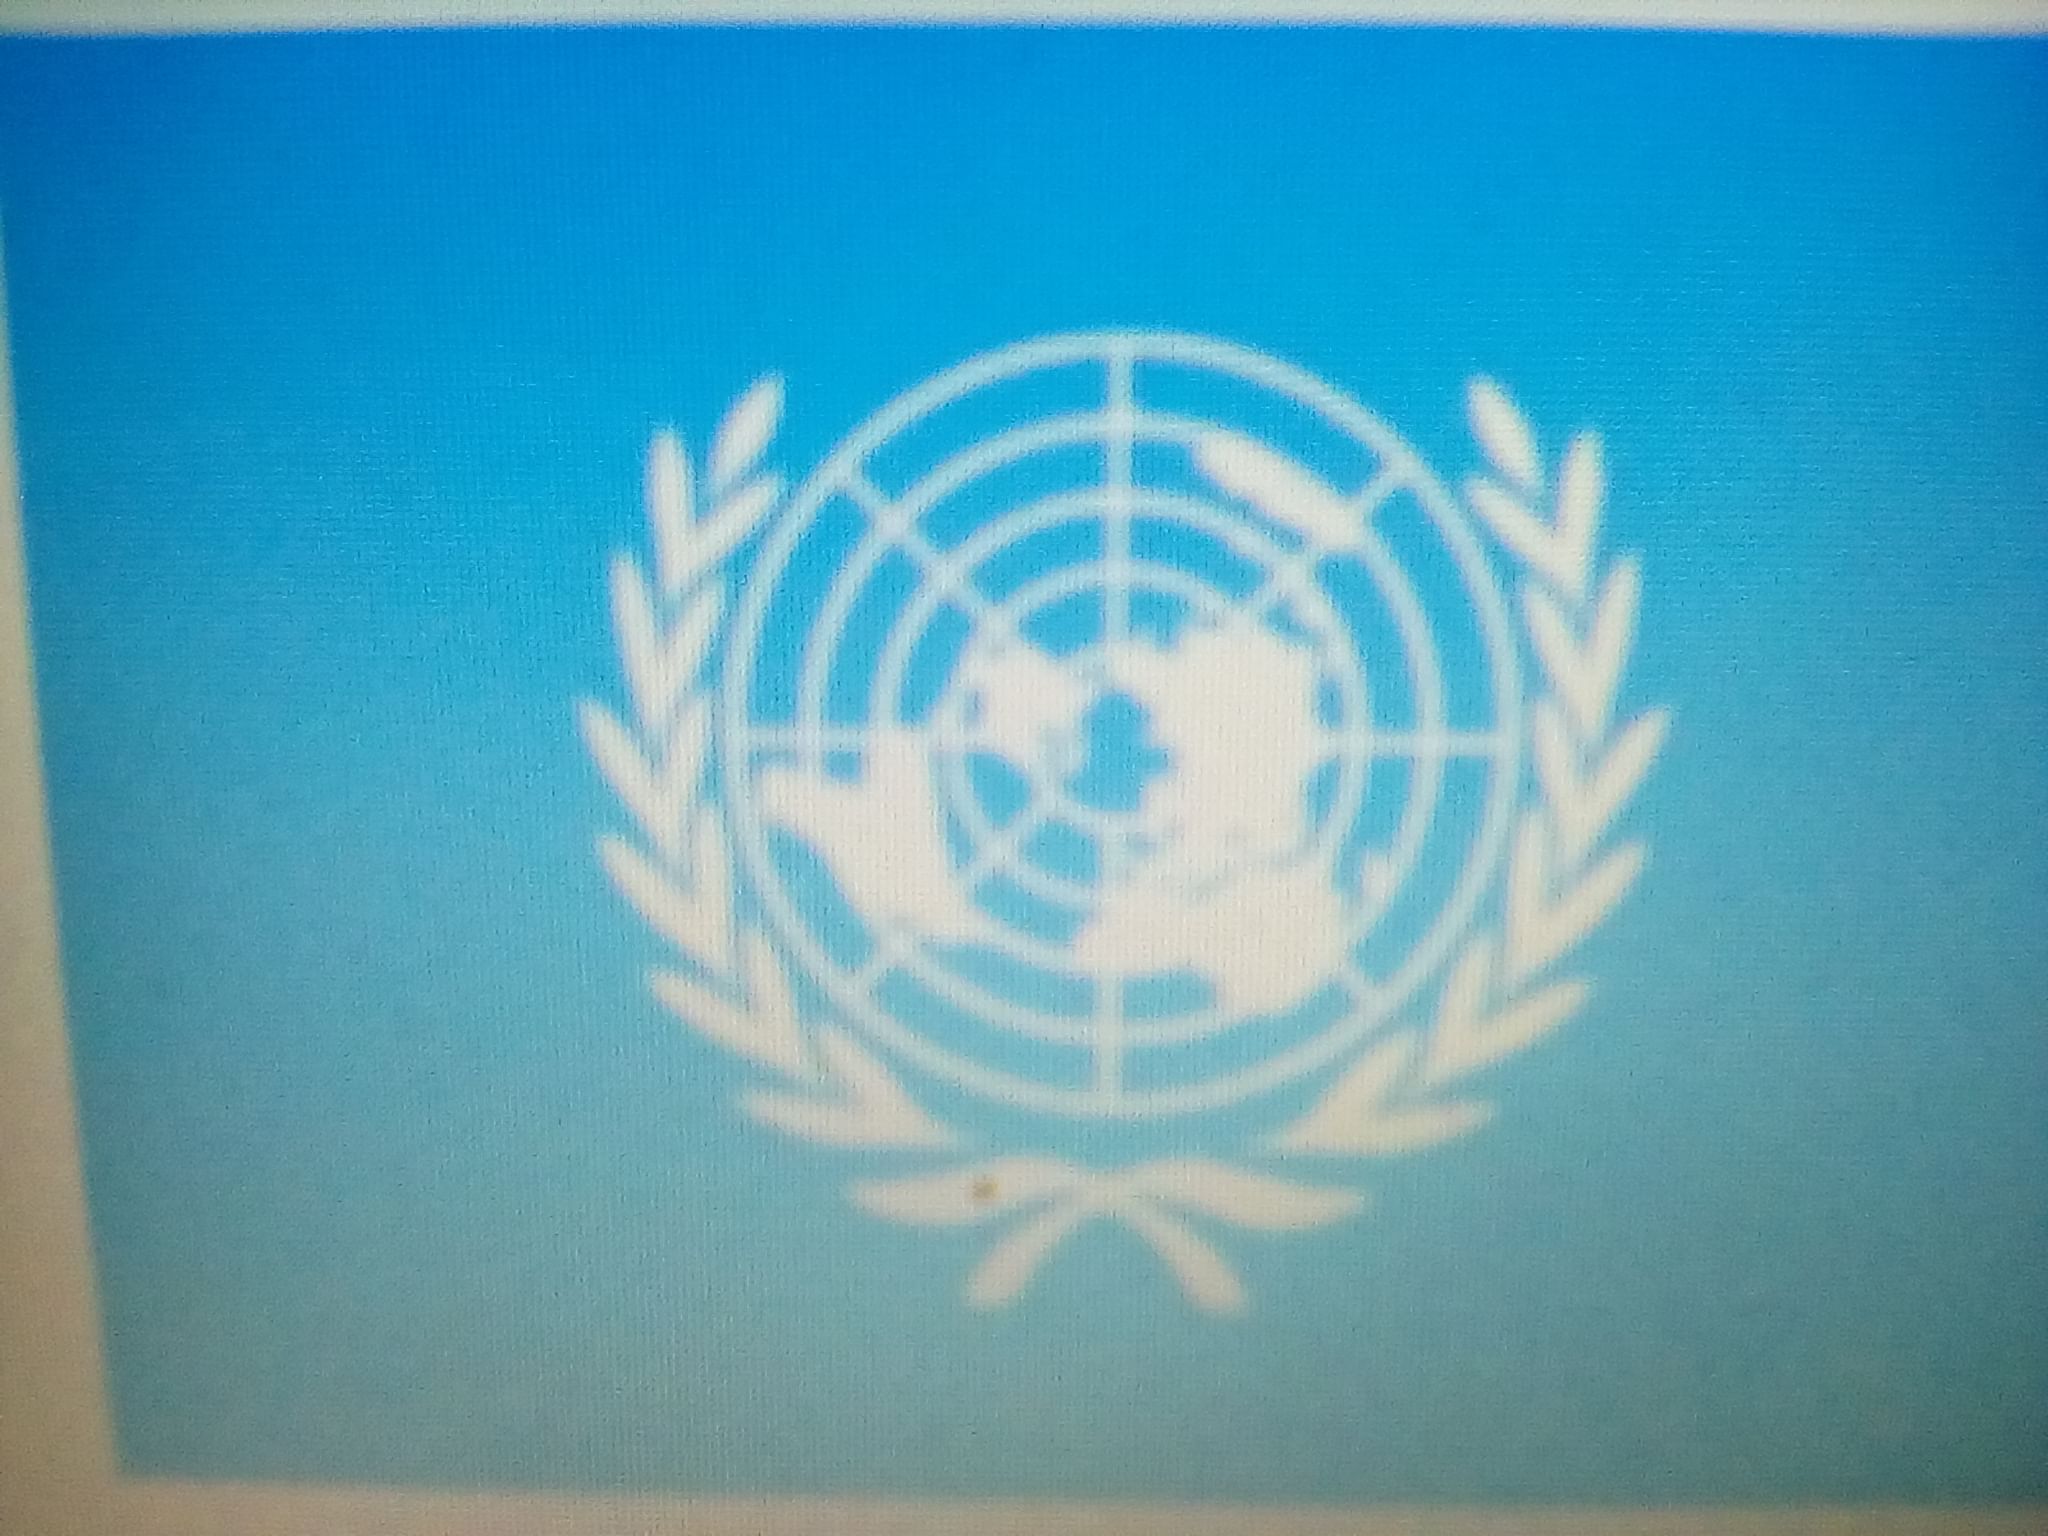 Оон 2020. Радужный флаг ООН. Флаг ООН Донецка. День ООН 24 октября картинки. Флаг ООН Копировать смайлик.